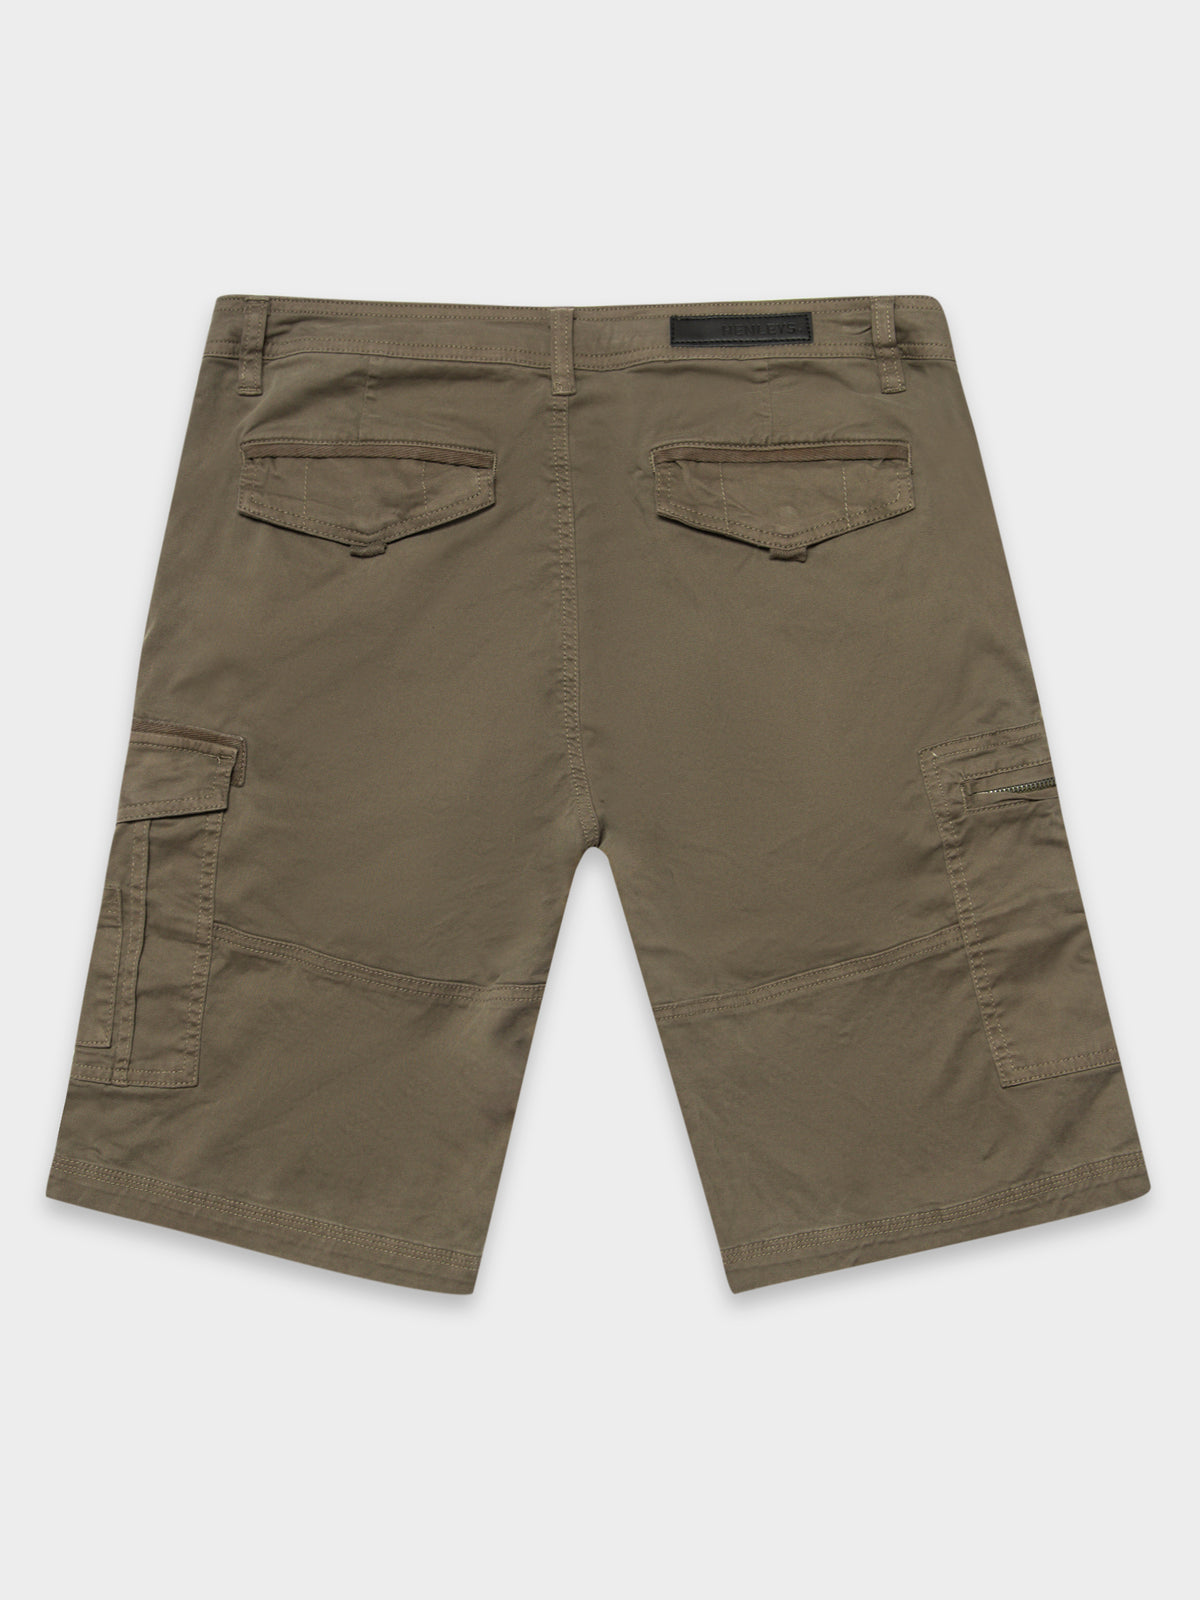 Leon Cargo Shorts in Army Green